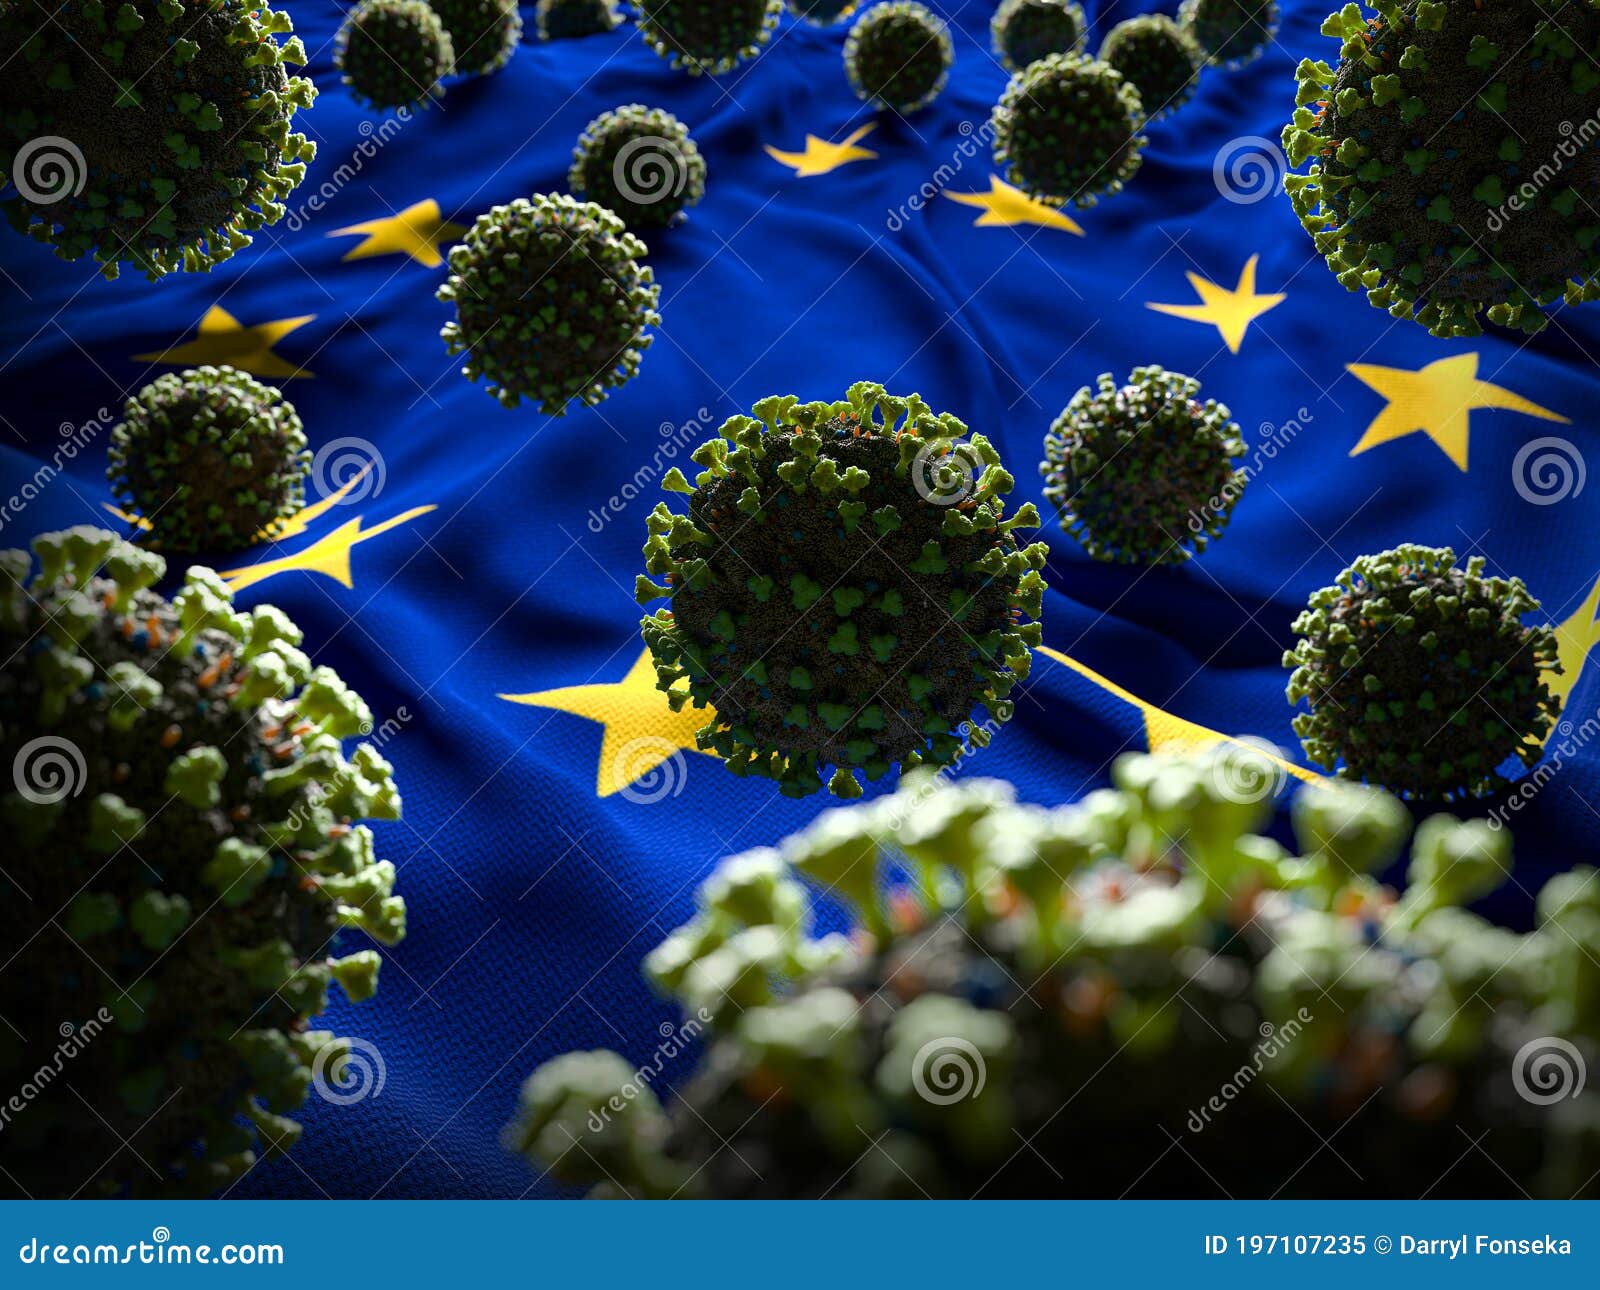 covid-19 coronavirus molecules on european union flag - health crisis rising covid cases - europe virus pandemic casualties